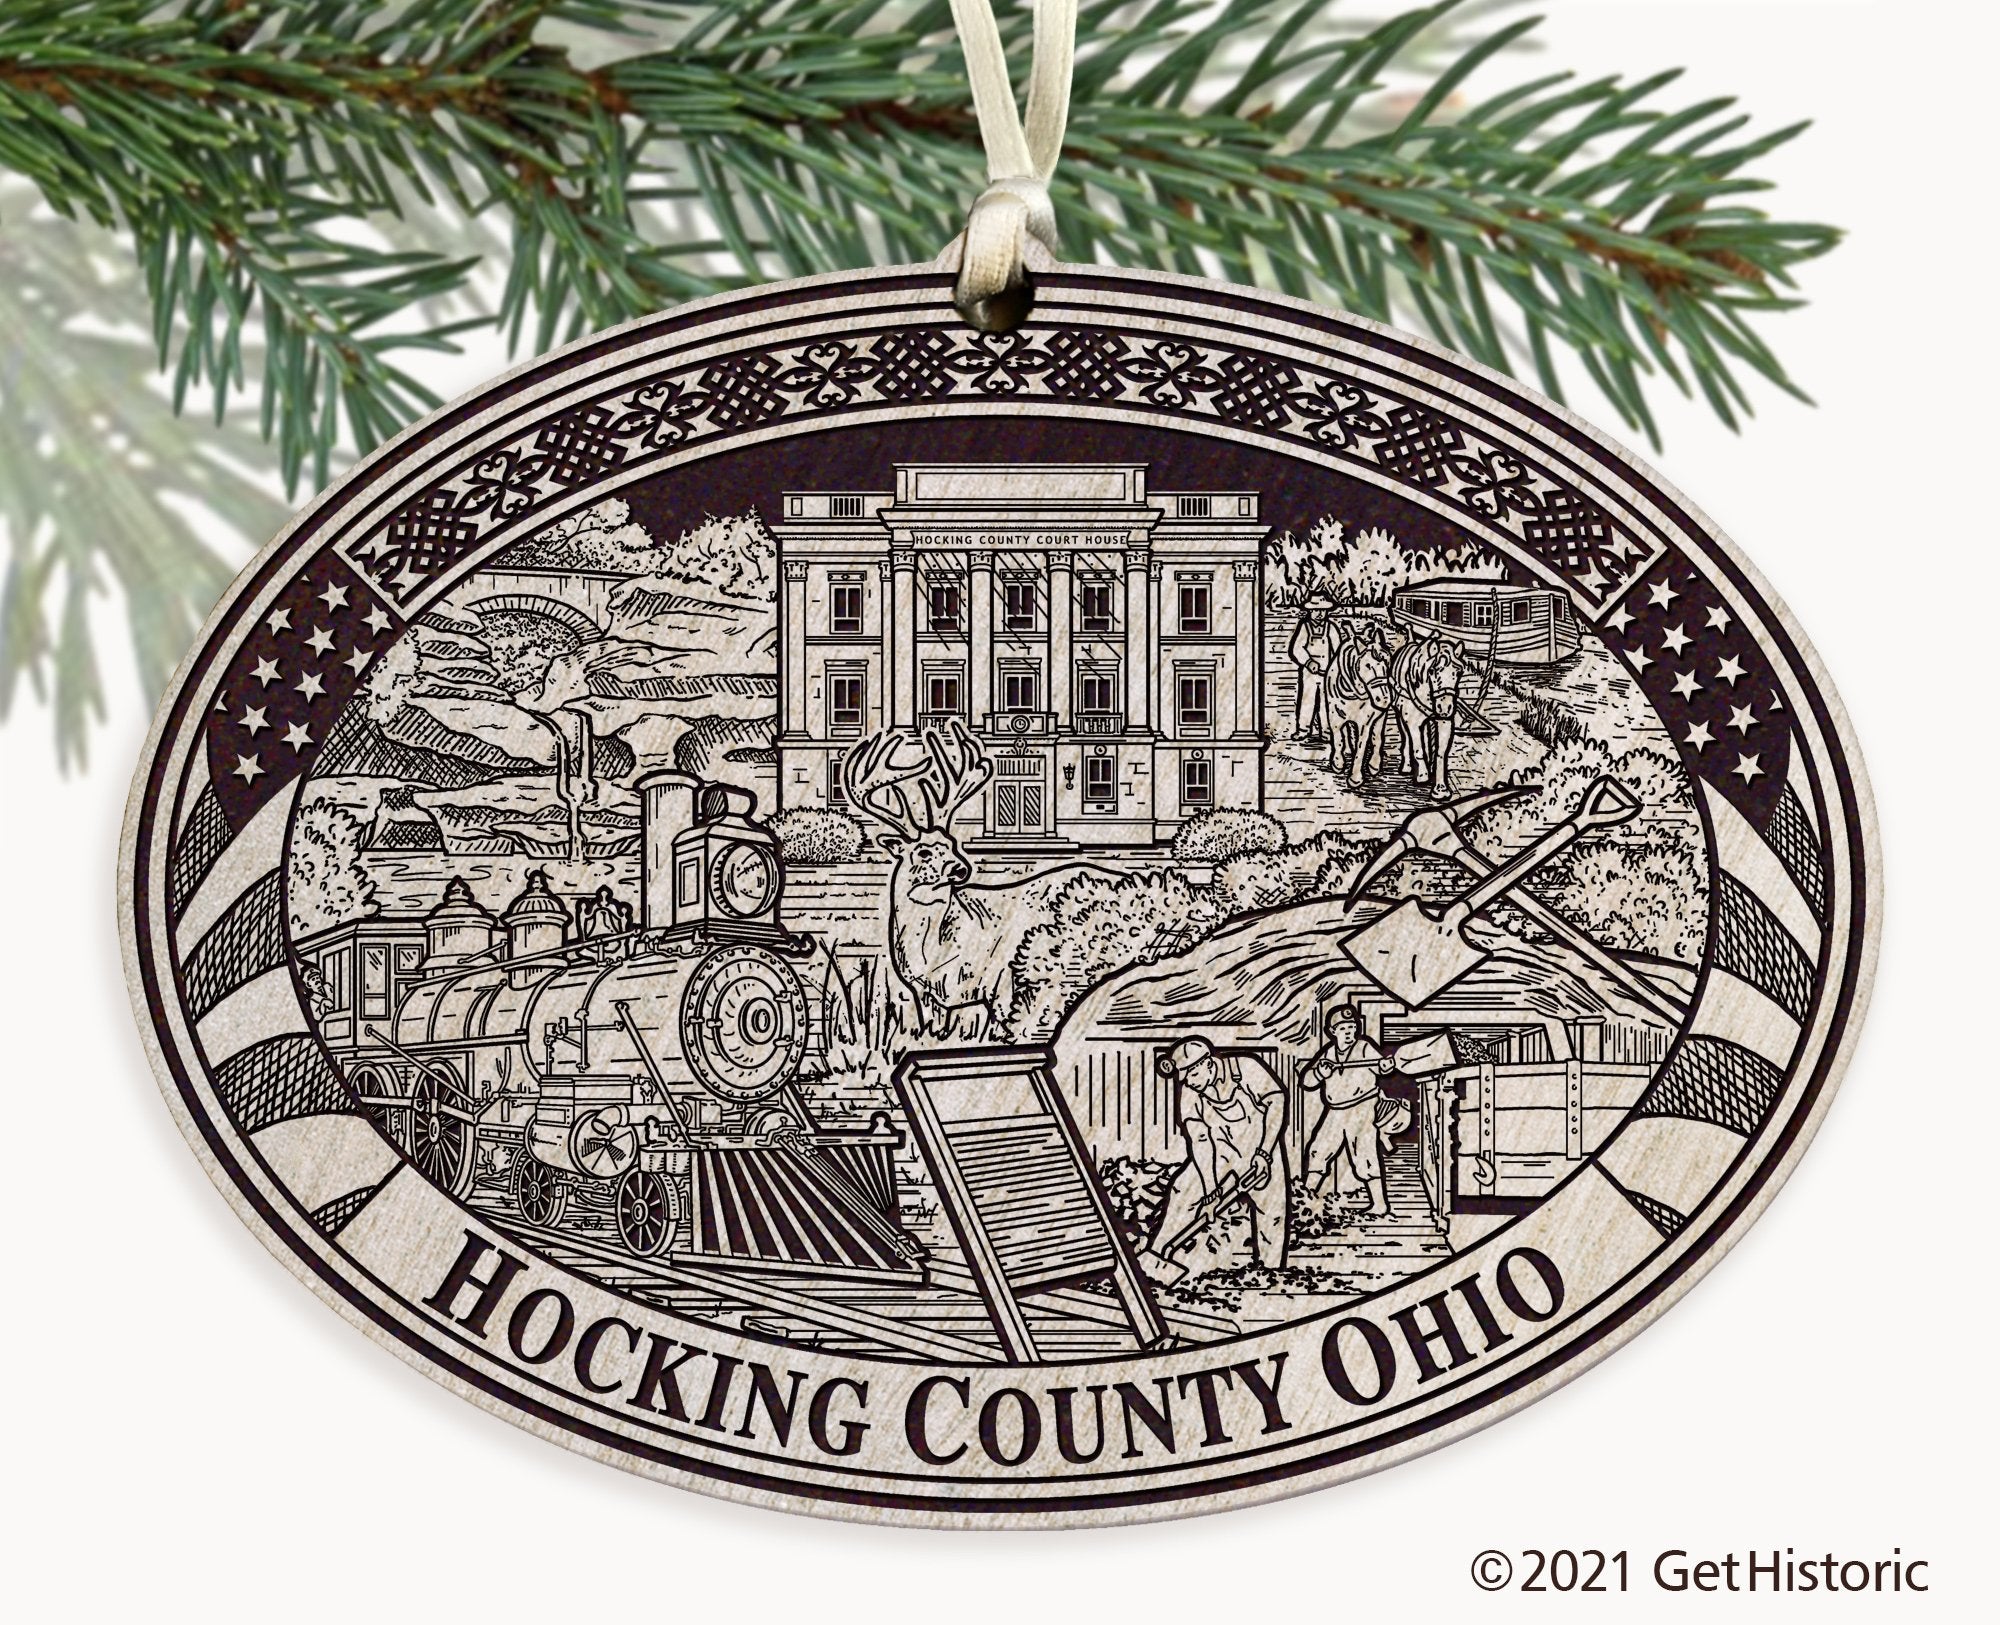 Hocking County Ohio Engraved Ornament